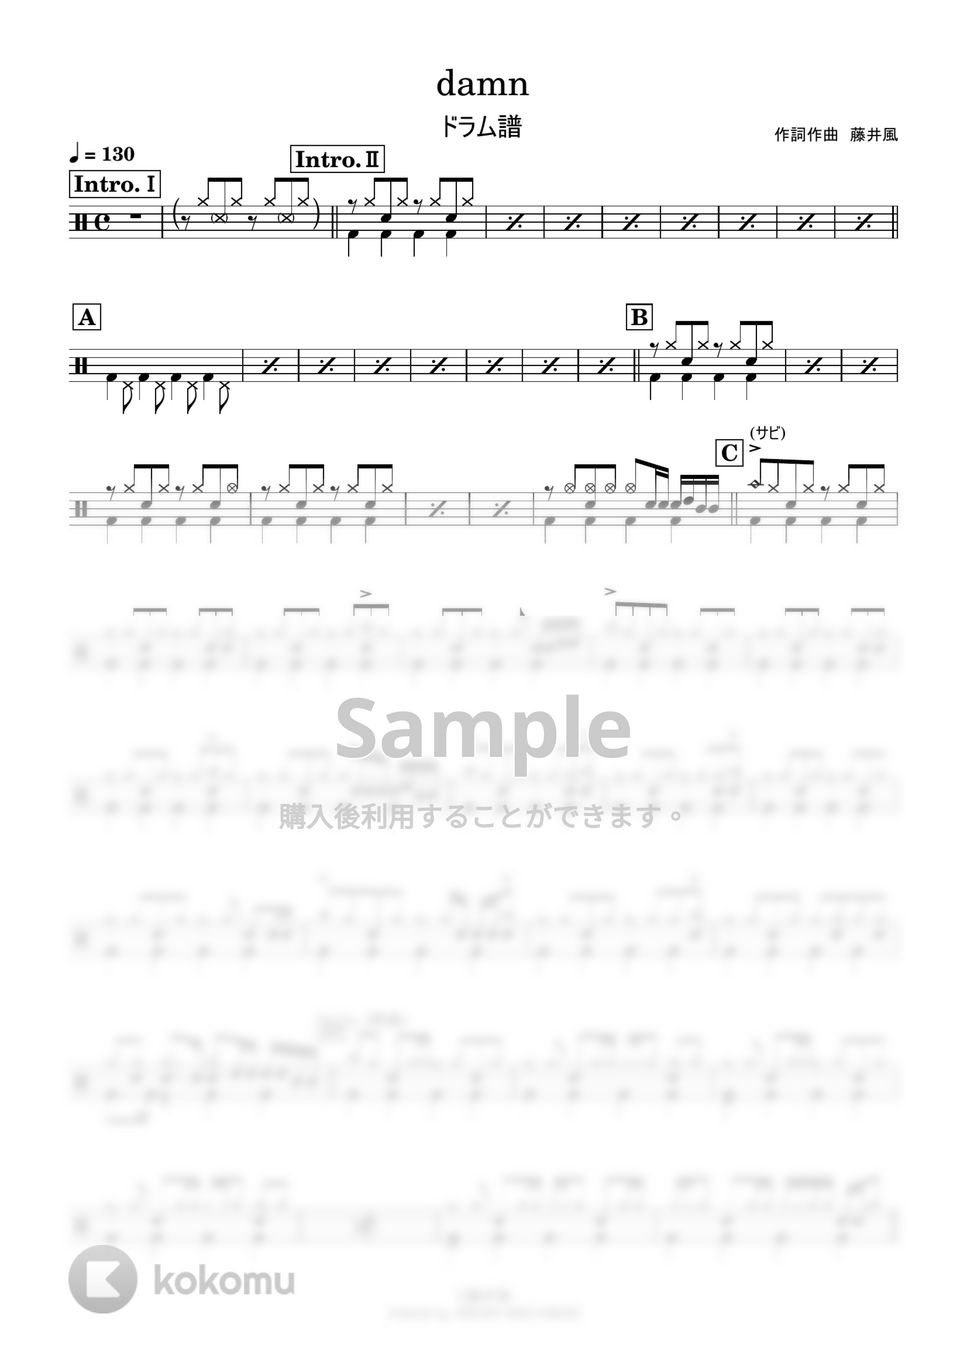 藤井風 - damn (ドラム譜MIDI付) by 鈴木建作